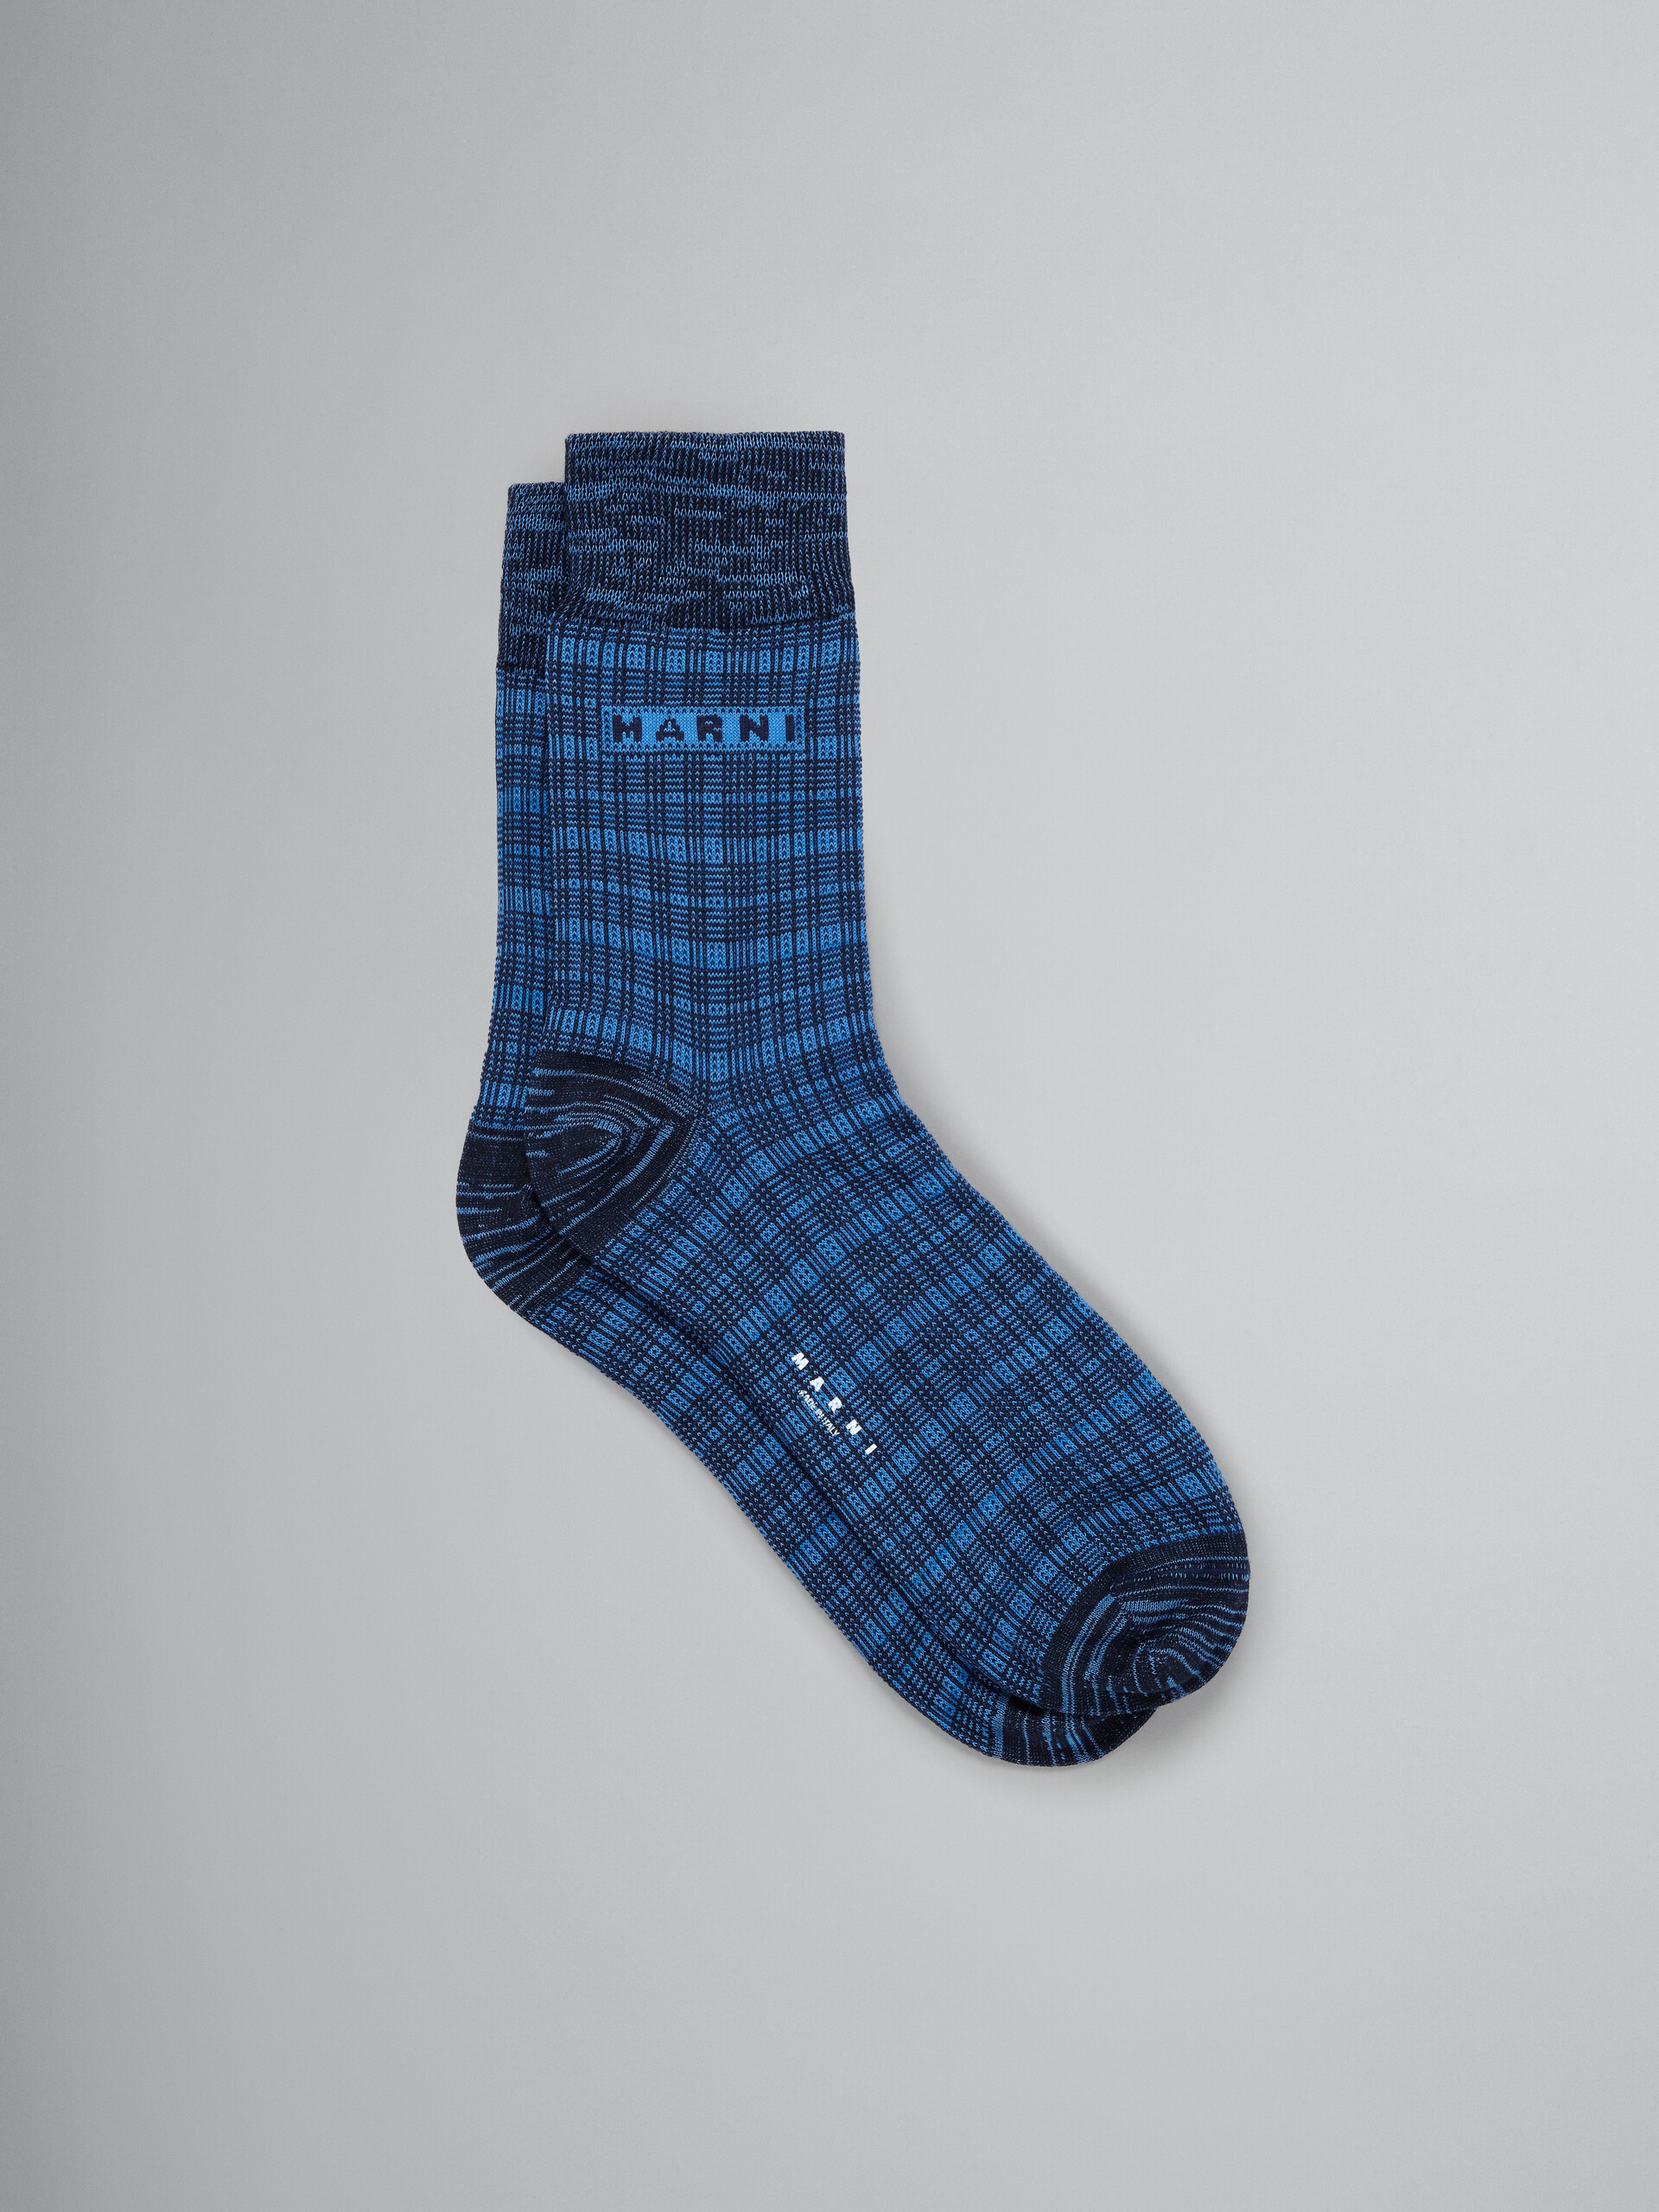 Blue socks with logo inlay - Socks - Image 1